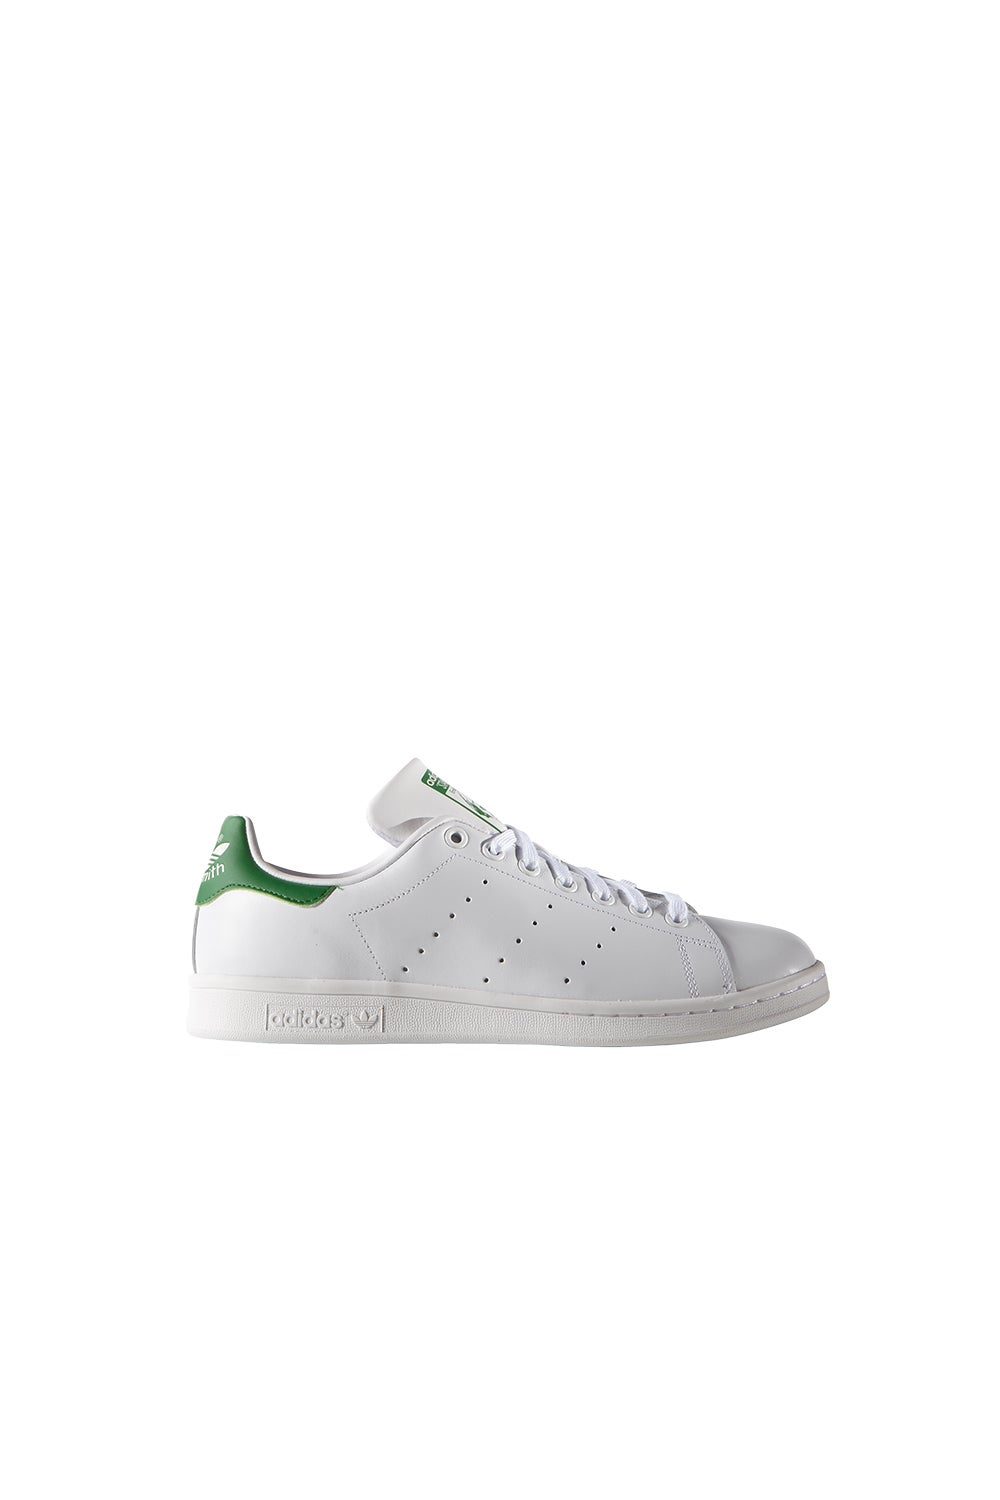 Adidas Stan Smith Ftwr White/green | Karen Walker